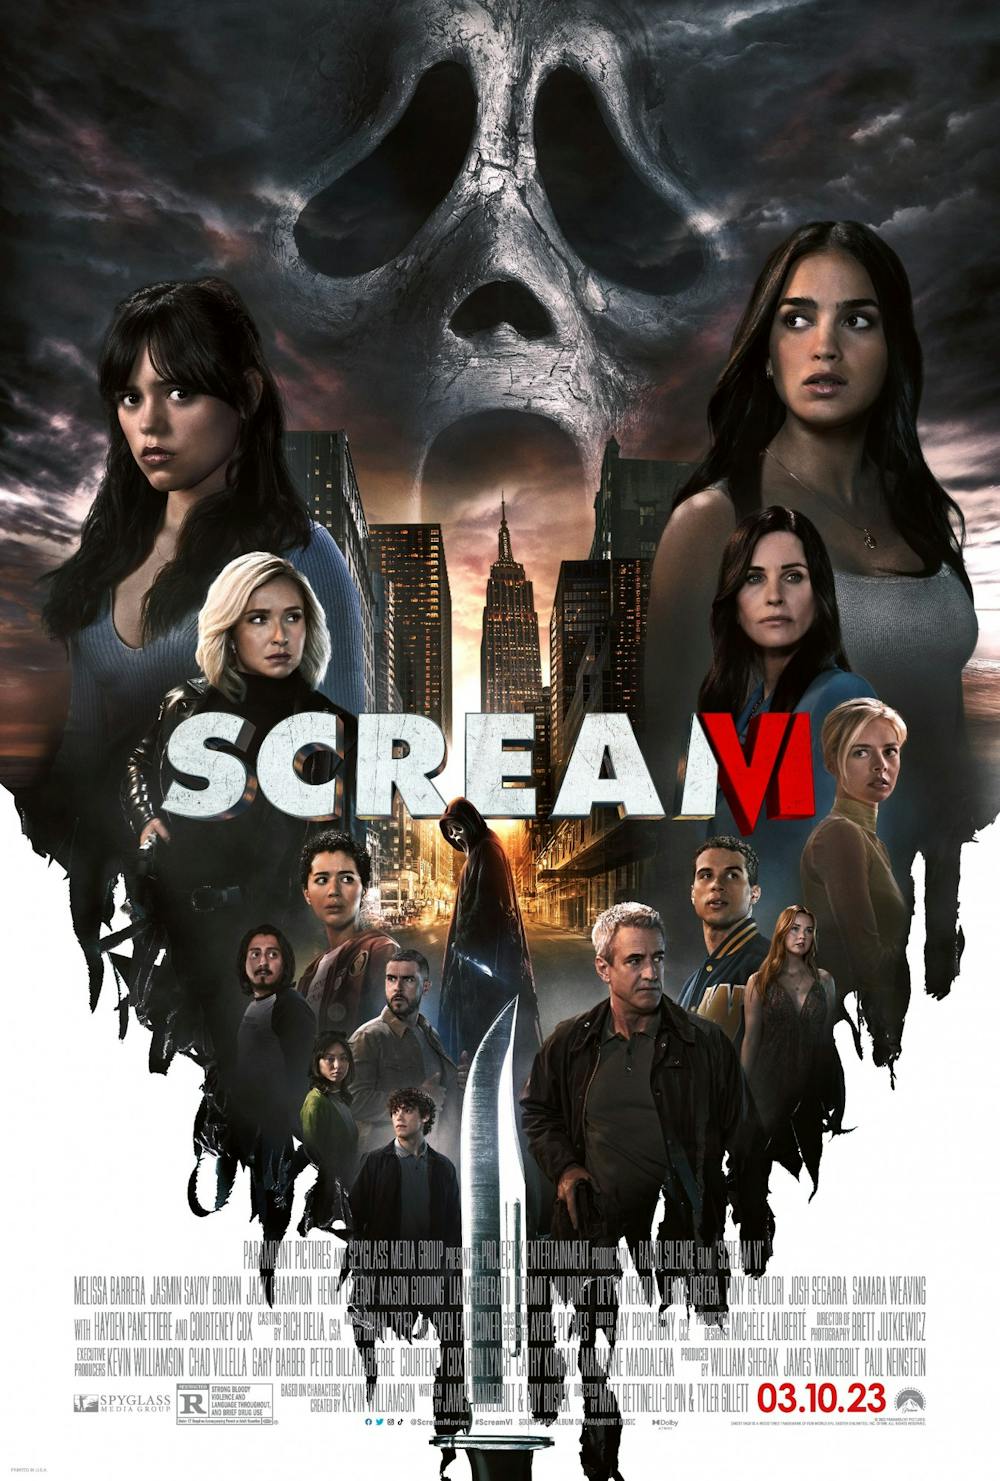 Review: 'Scream VI' plays on predictability